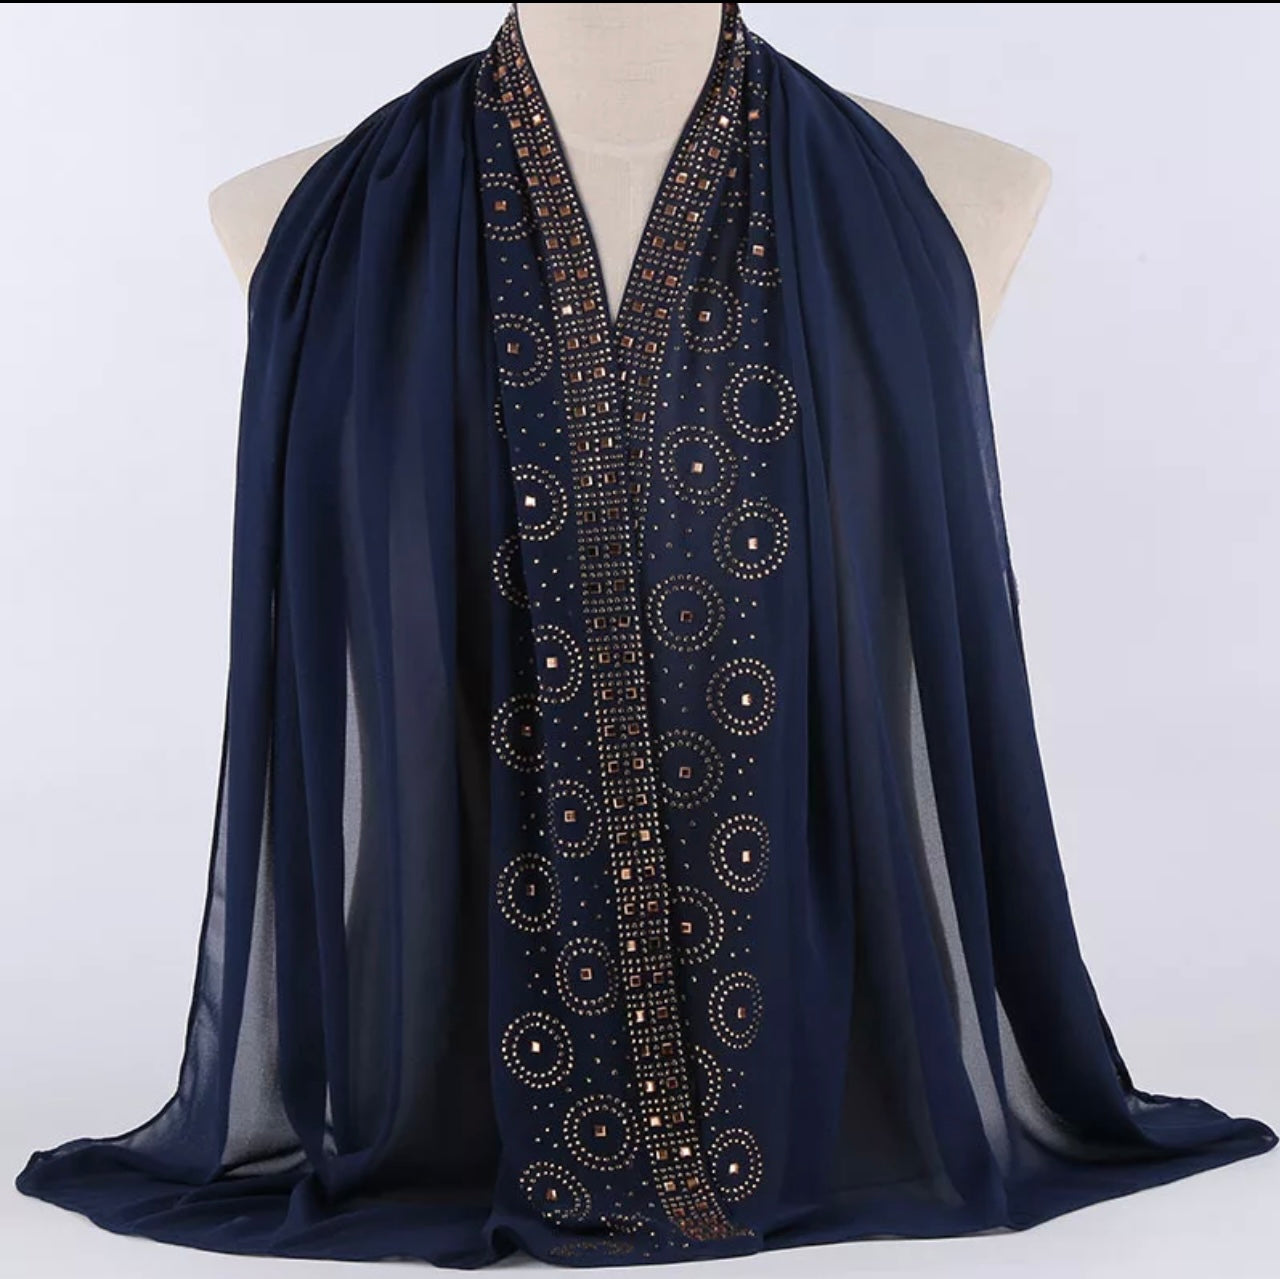 Modest Chiffon Hijab/Scarf with Glass Rhinestones